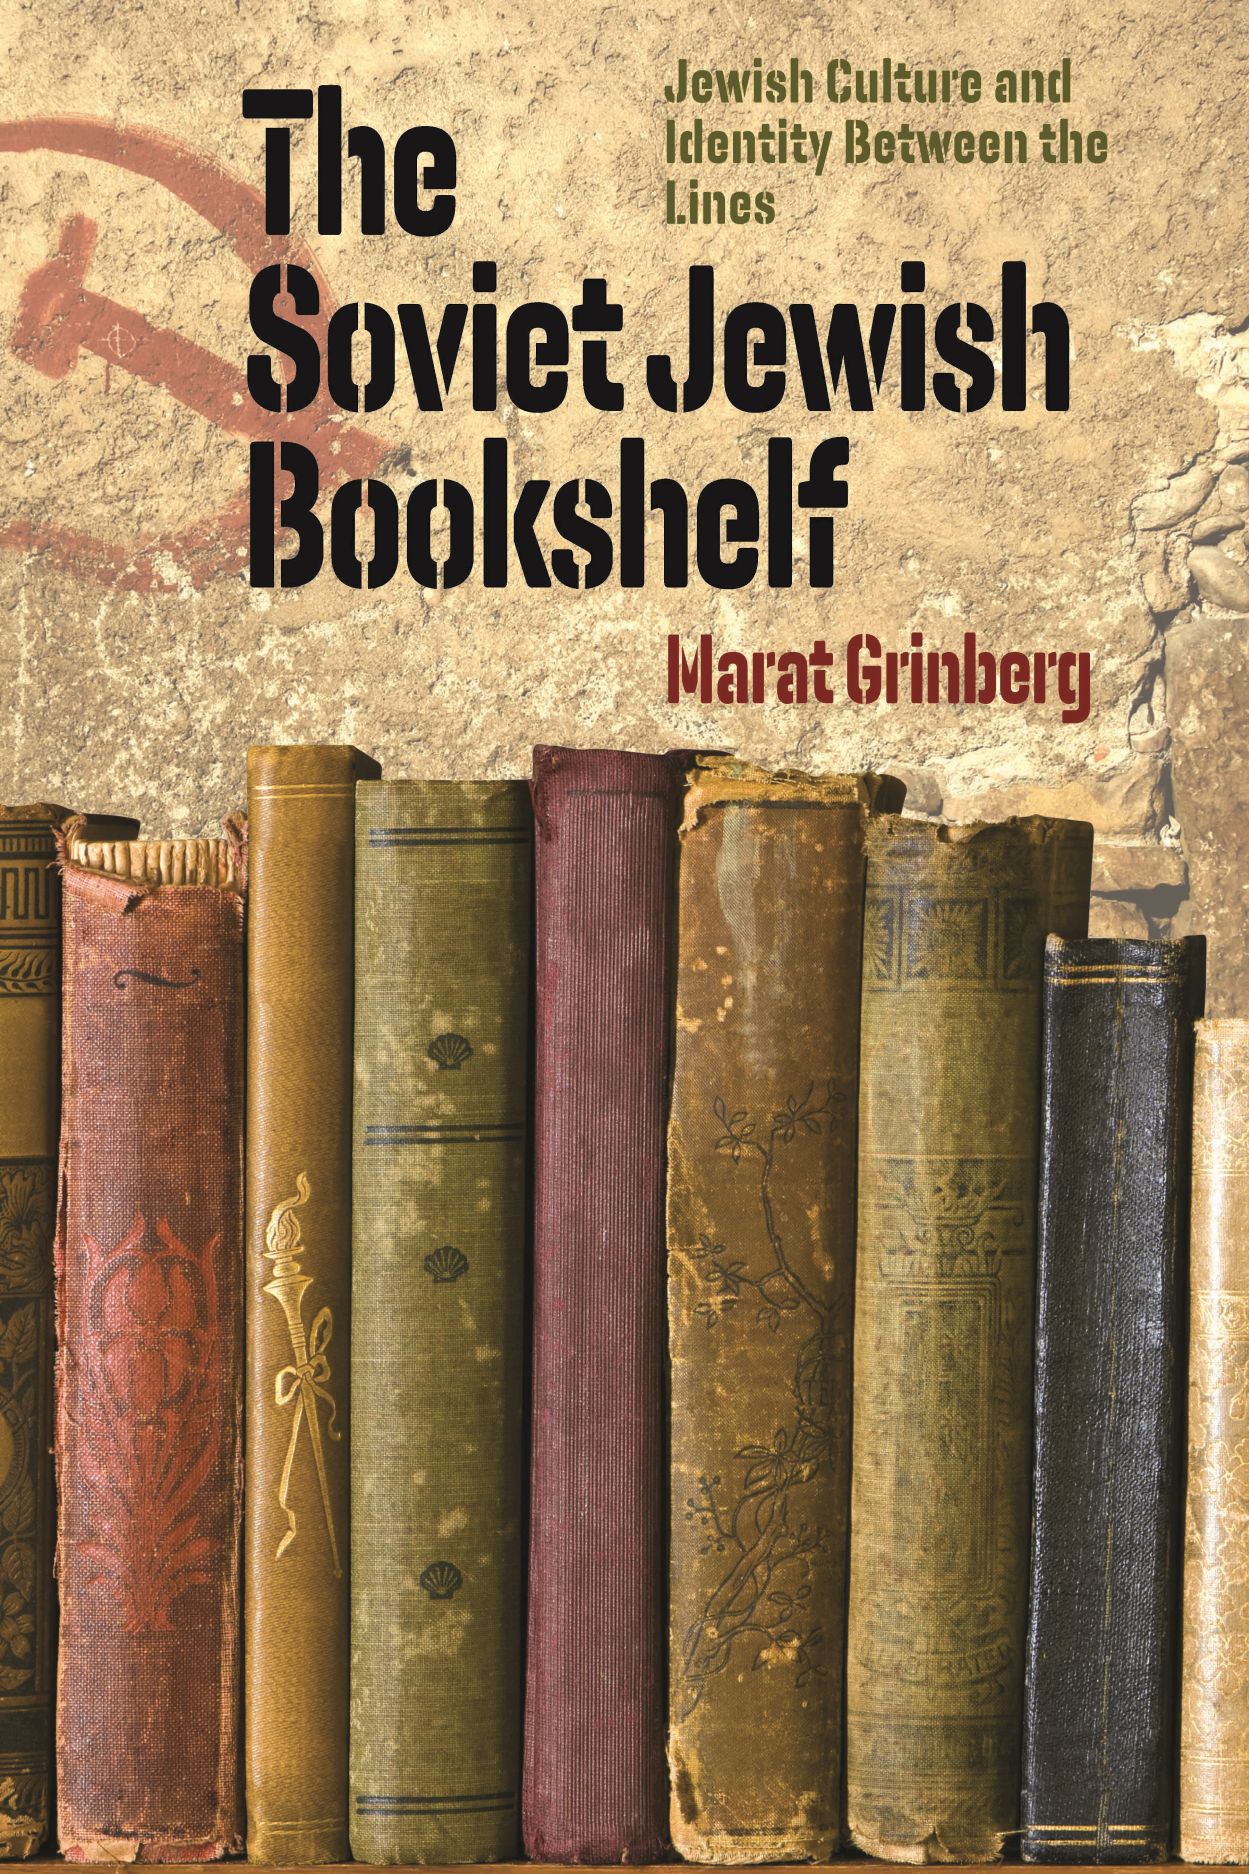 The Soviet Jewish Bookshelf: Jewish Culture and Identity Between the Lines,  Grinberg